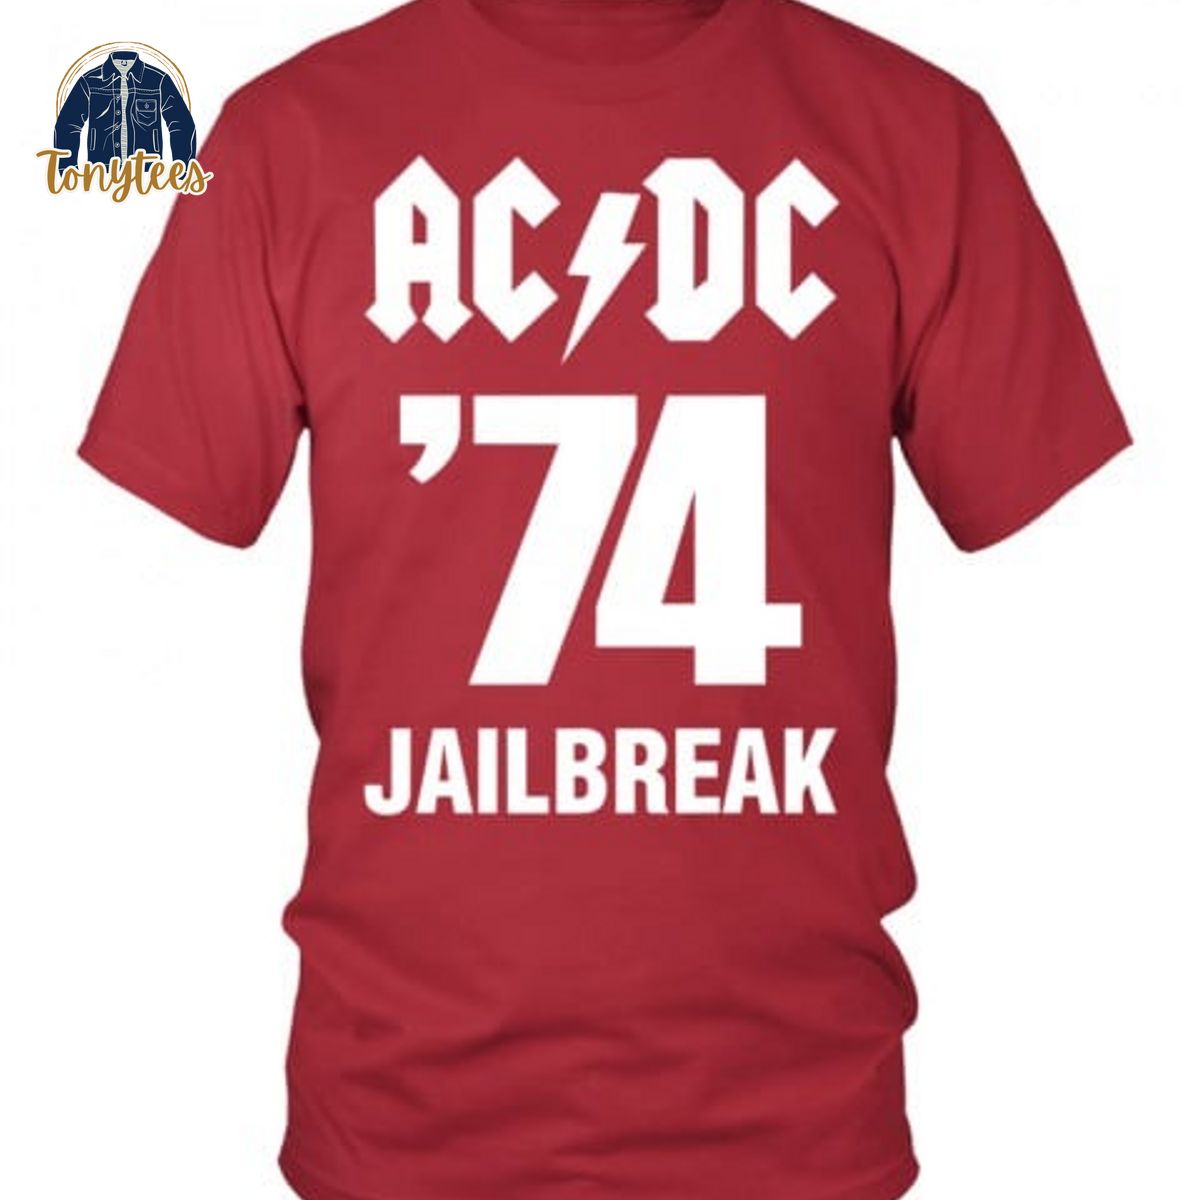 ACDC 74 Jailbreak Red Shirt